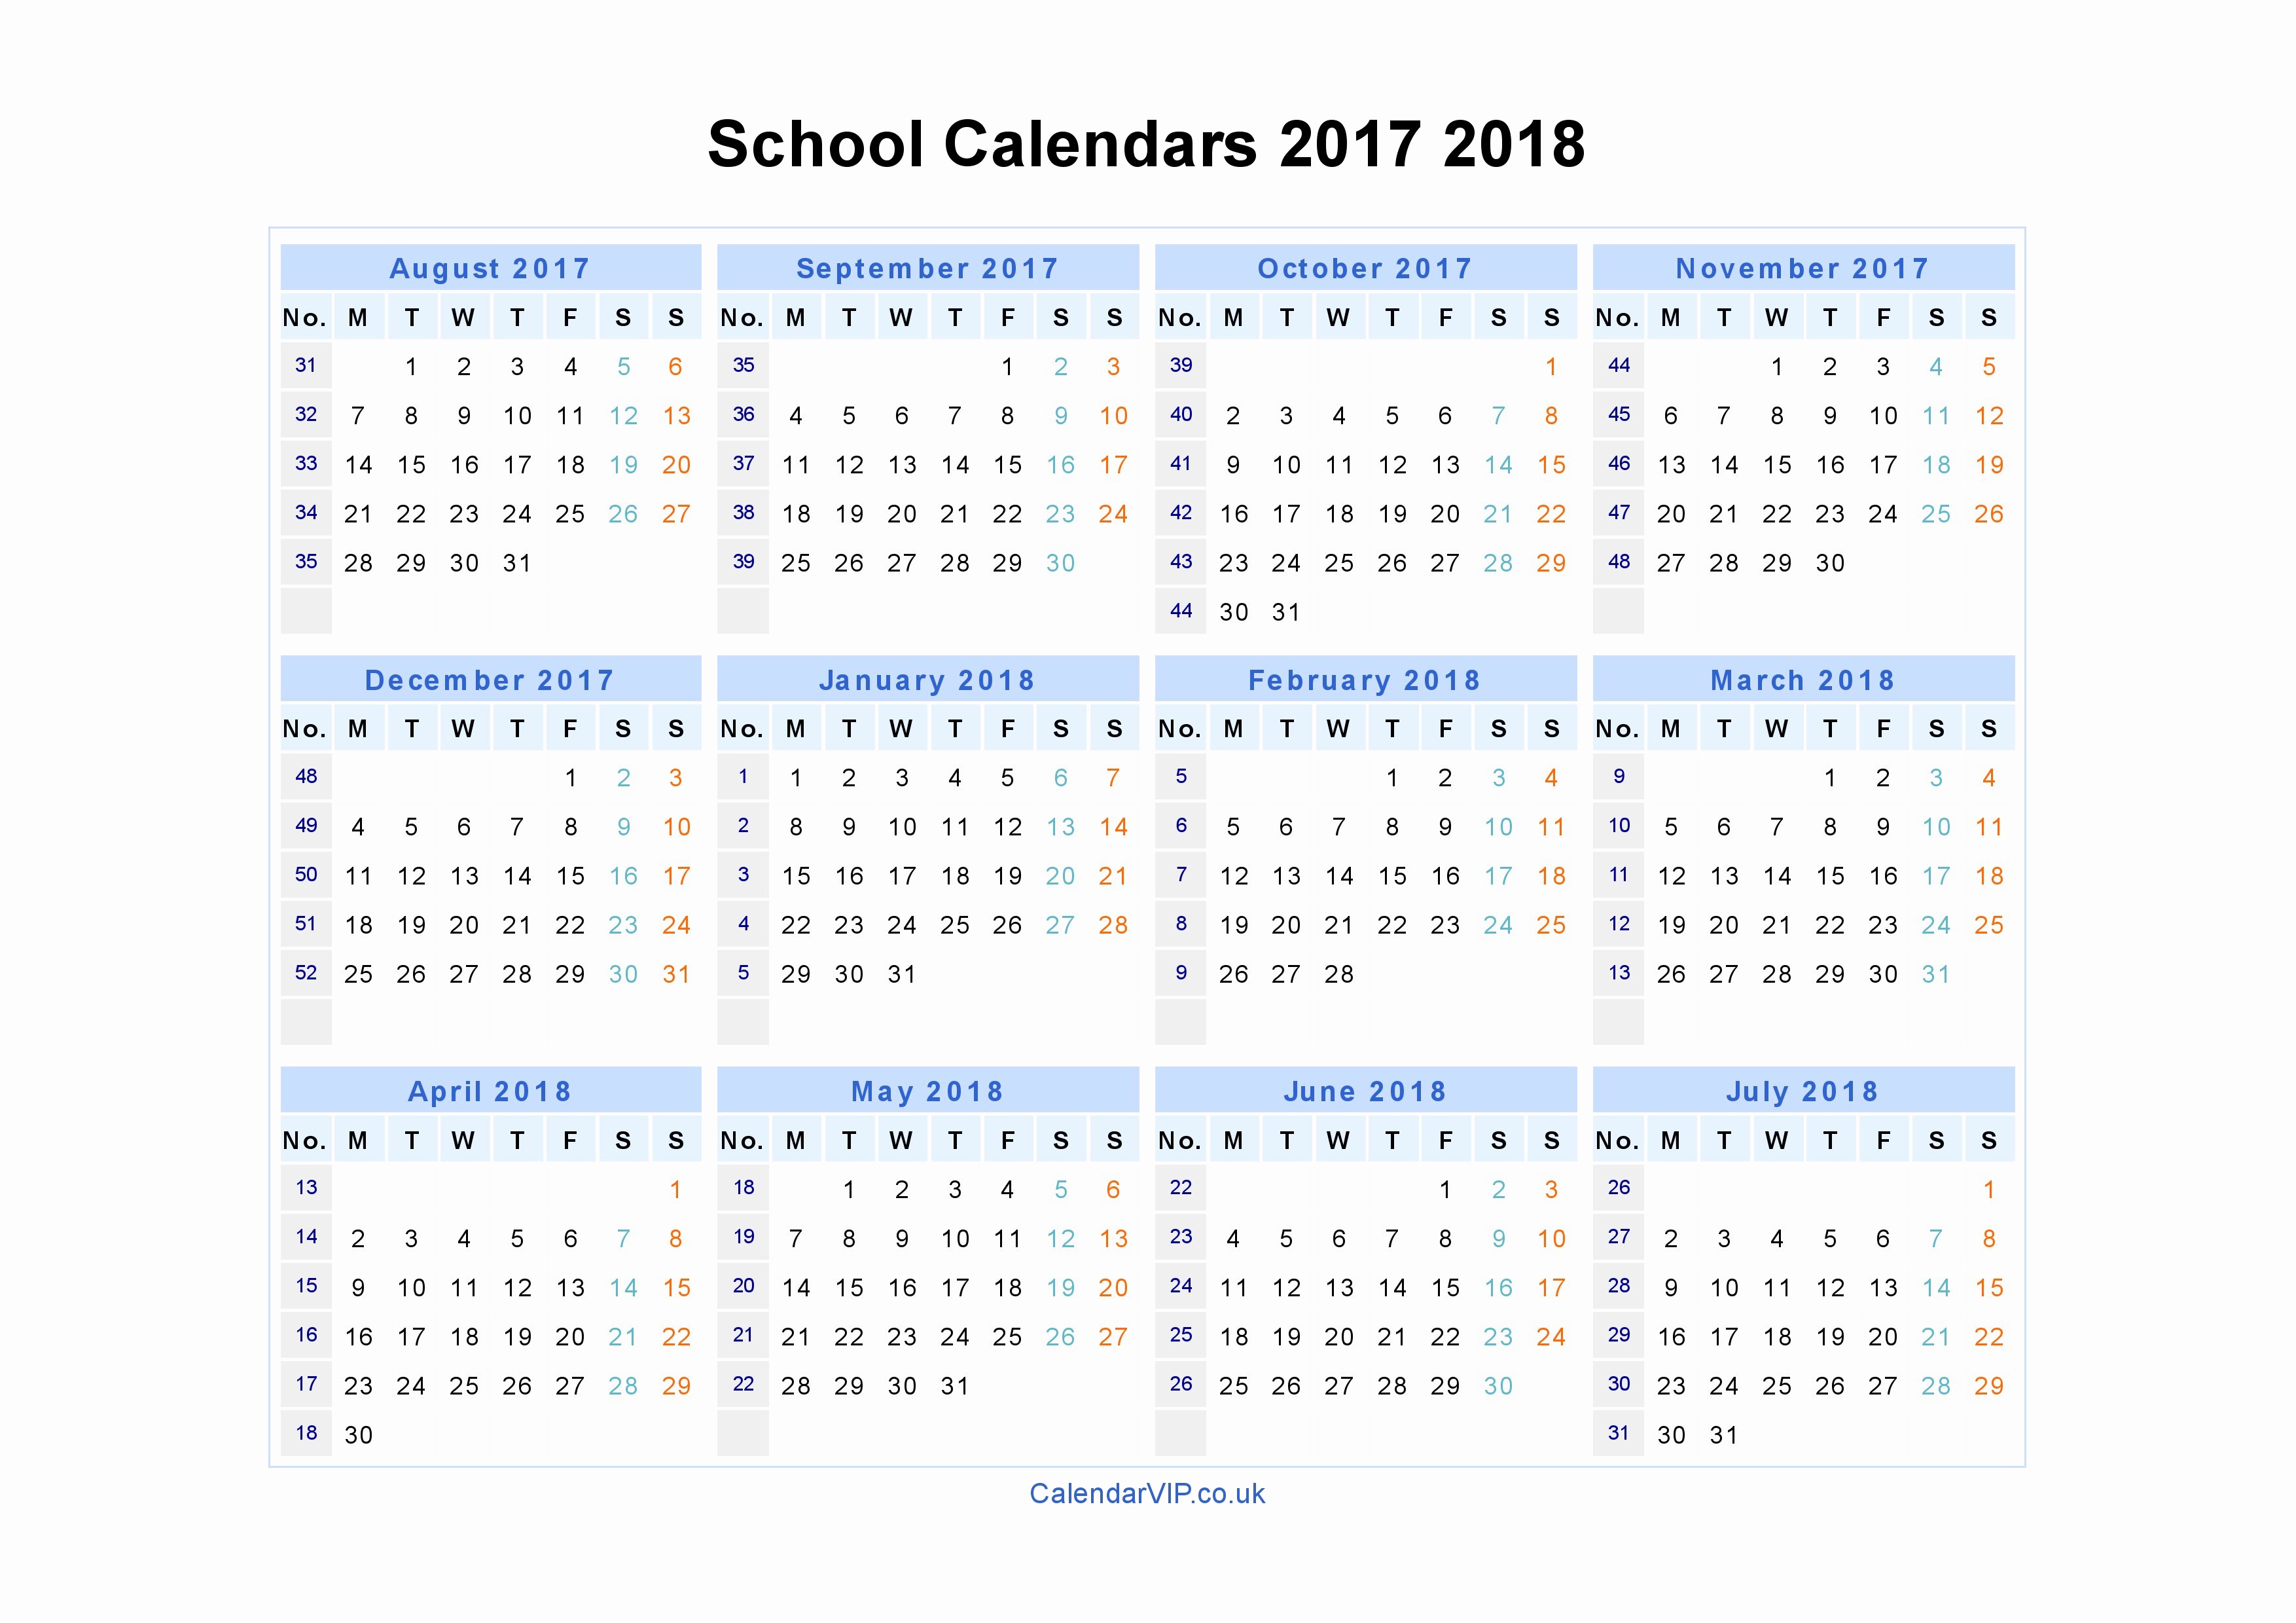 2017-2018 Blank Calendar Lovely School Calendars 2017 2018 Calendar From August 2017 to